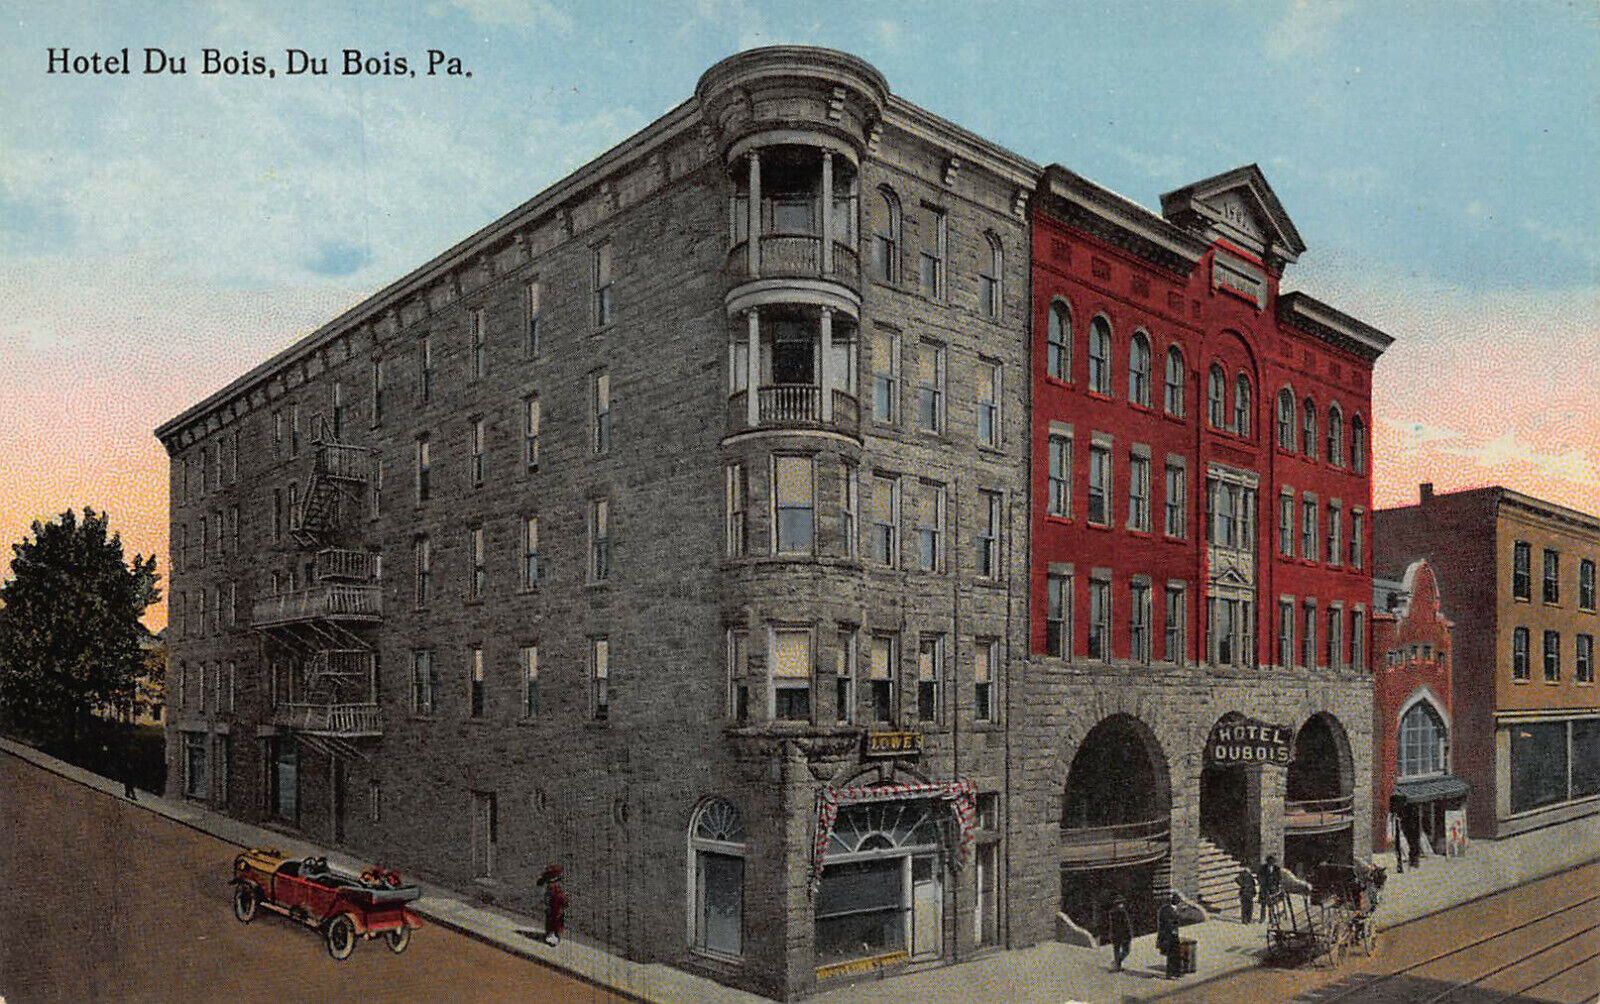 Hotel Du Bois, Du Bois, Pennsylvania, 1914 postcard, unused